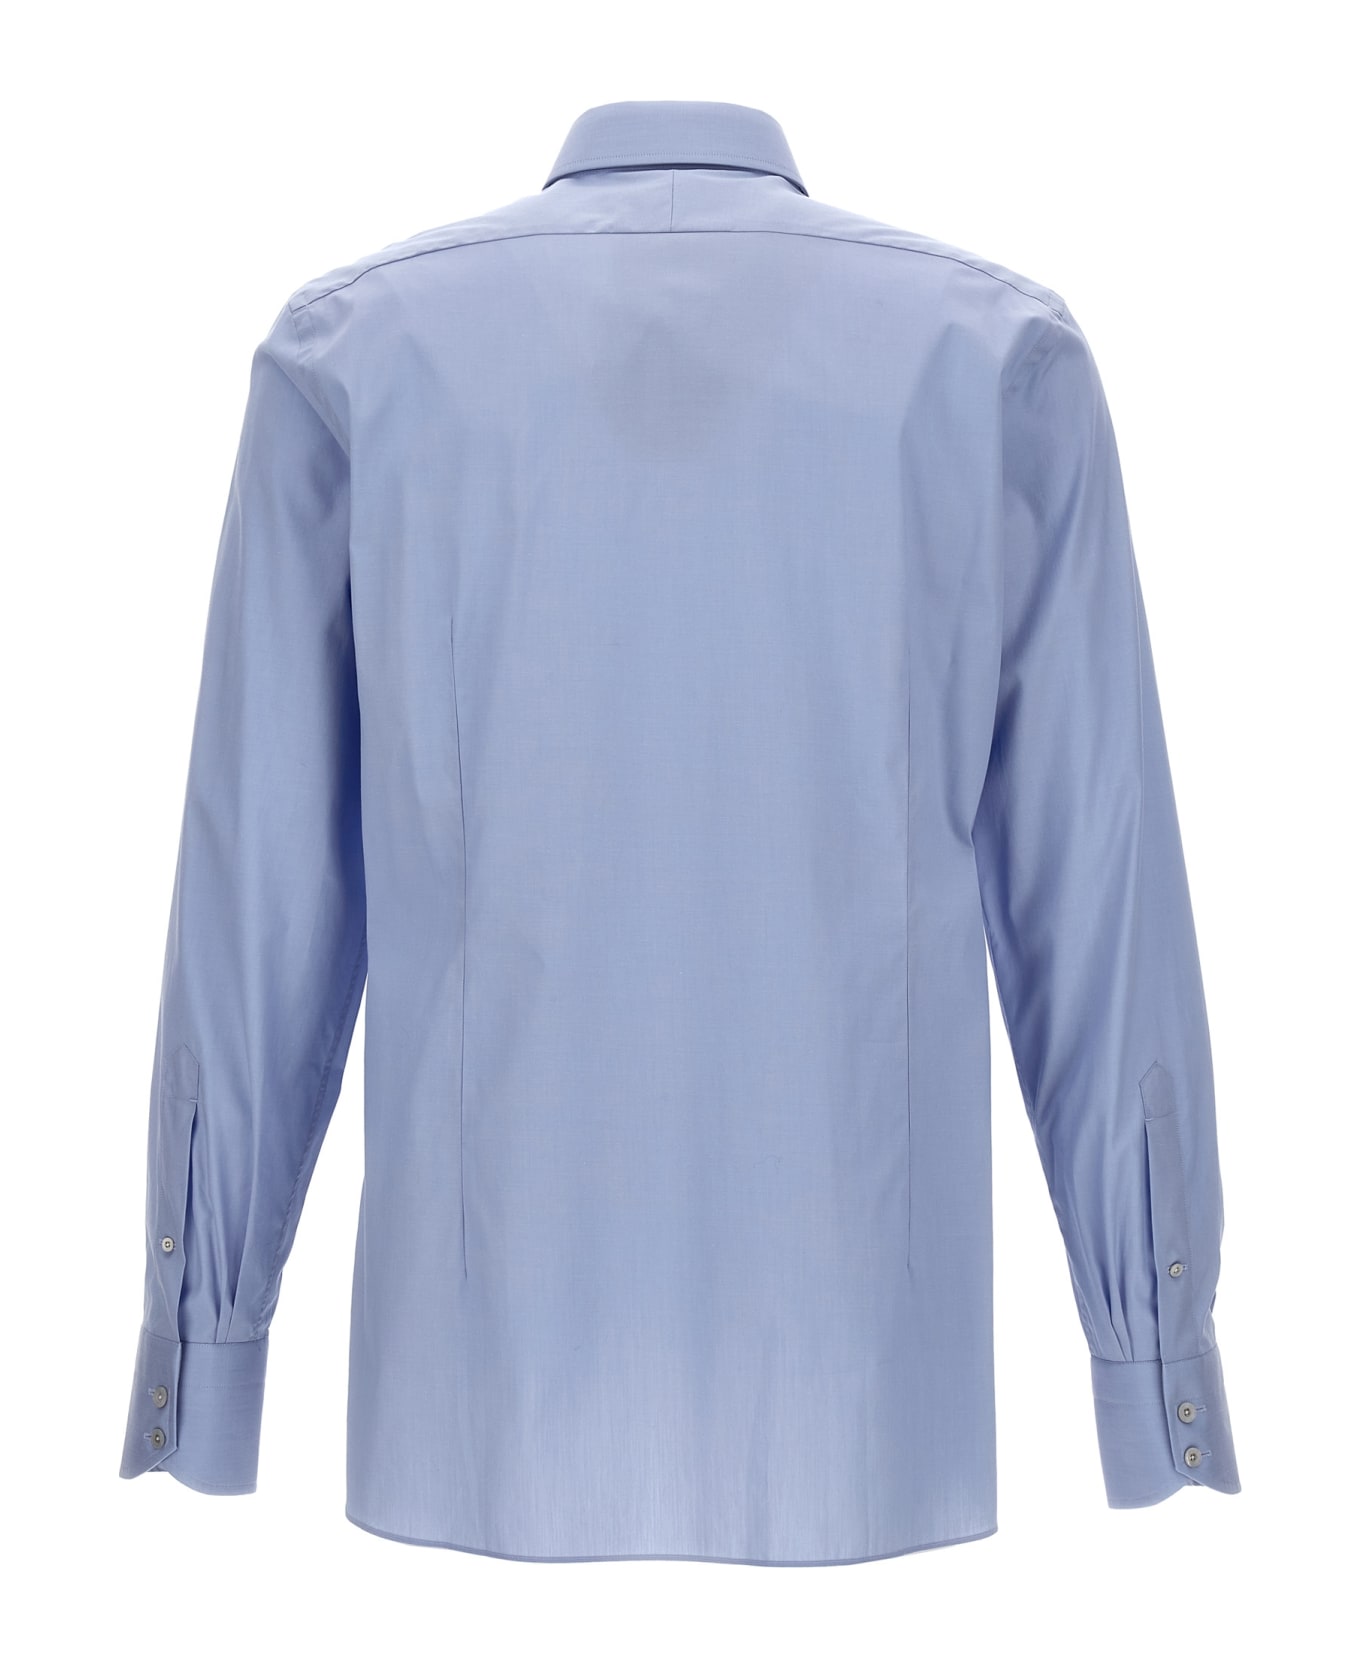 Tom Ford Poplin Cotton Shirt - Light Blue